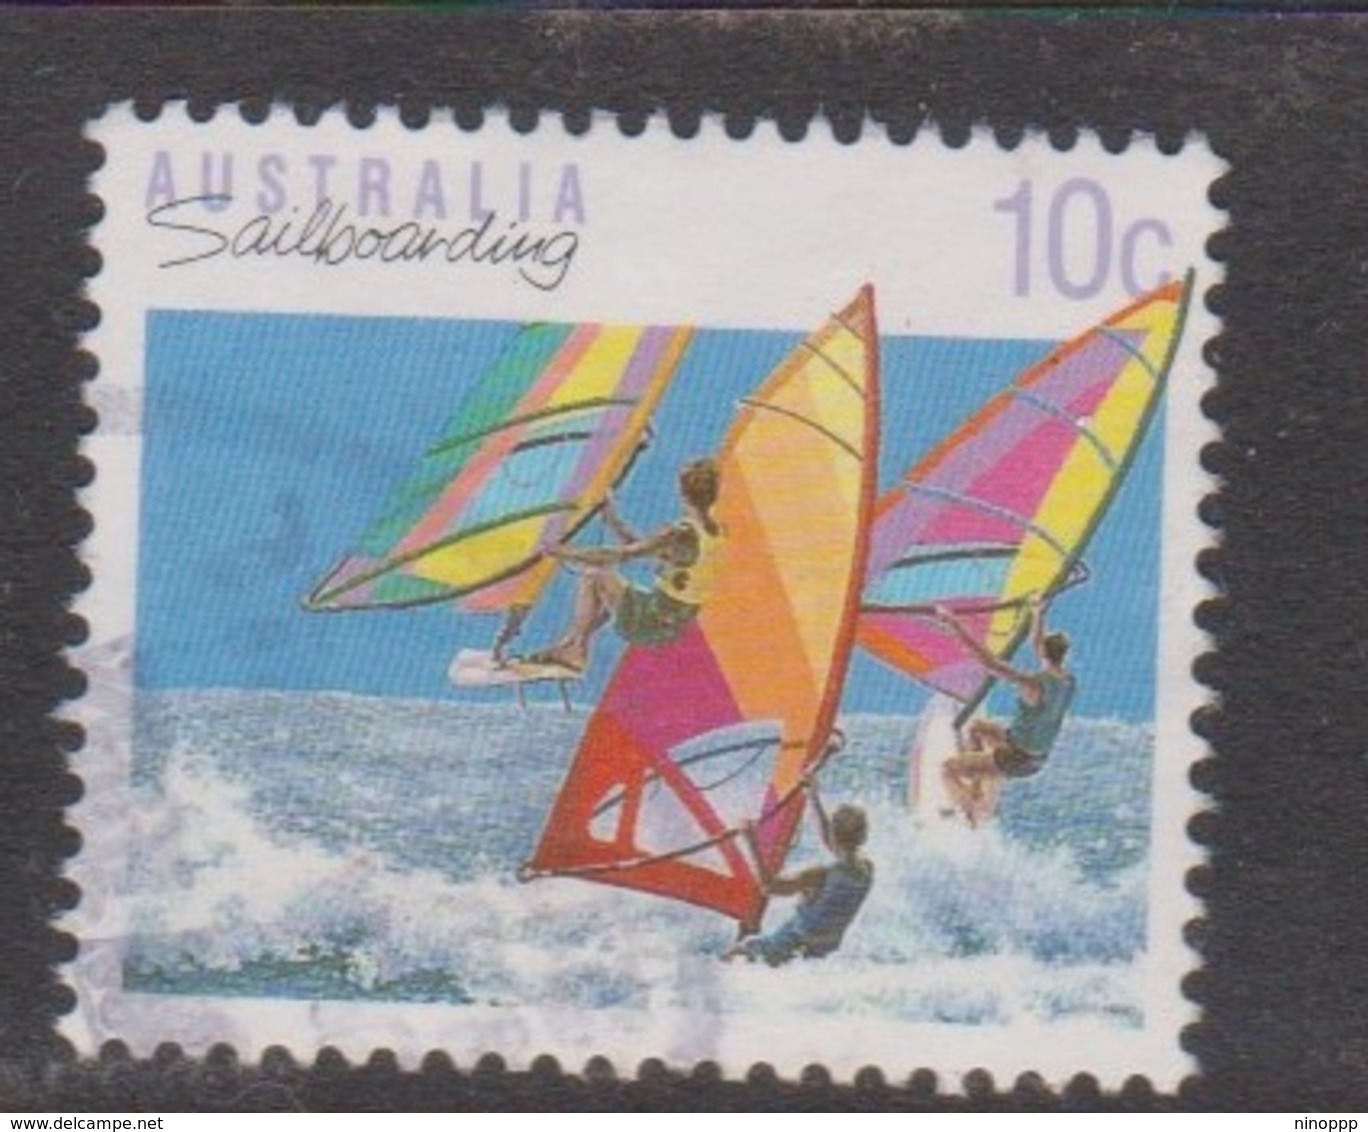 Australia ASC 1228b 1990 Sports 10c Sailboarding Perf 14 X 14.5, Used - Essais & Réimpressions